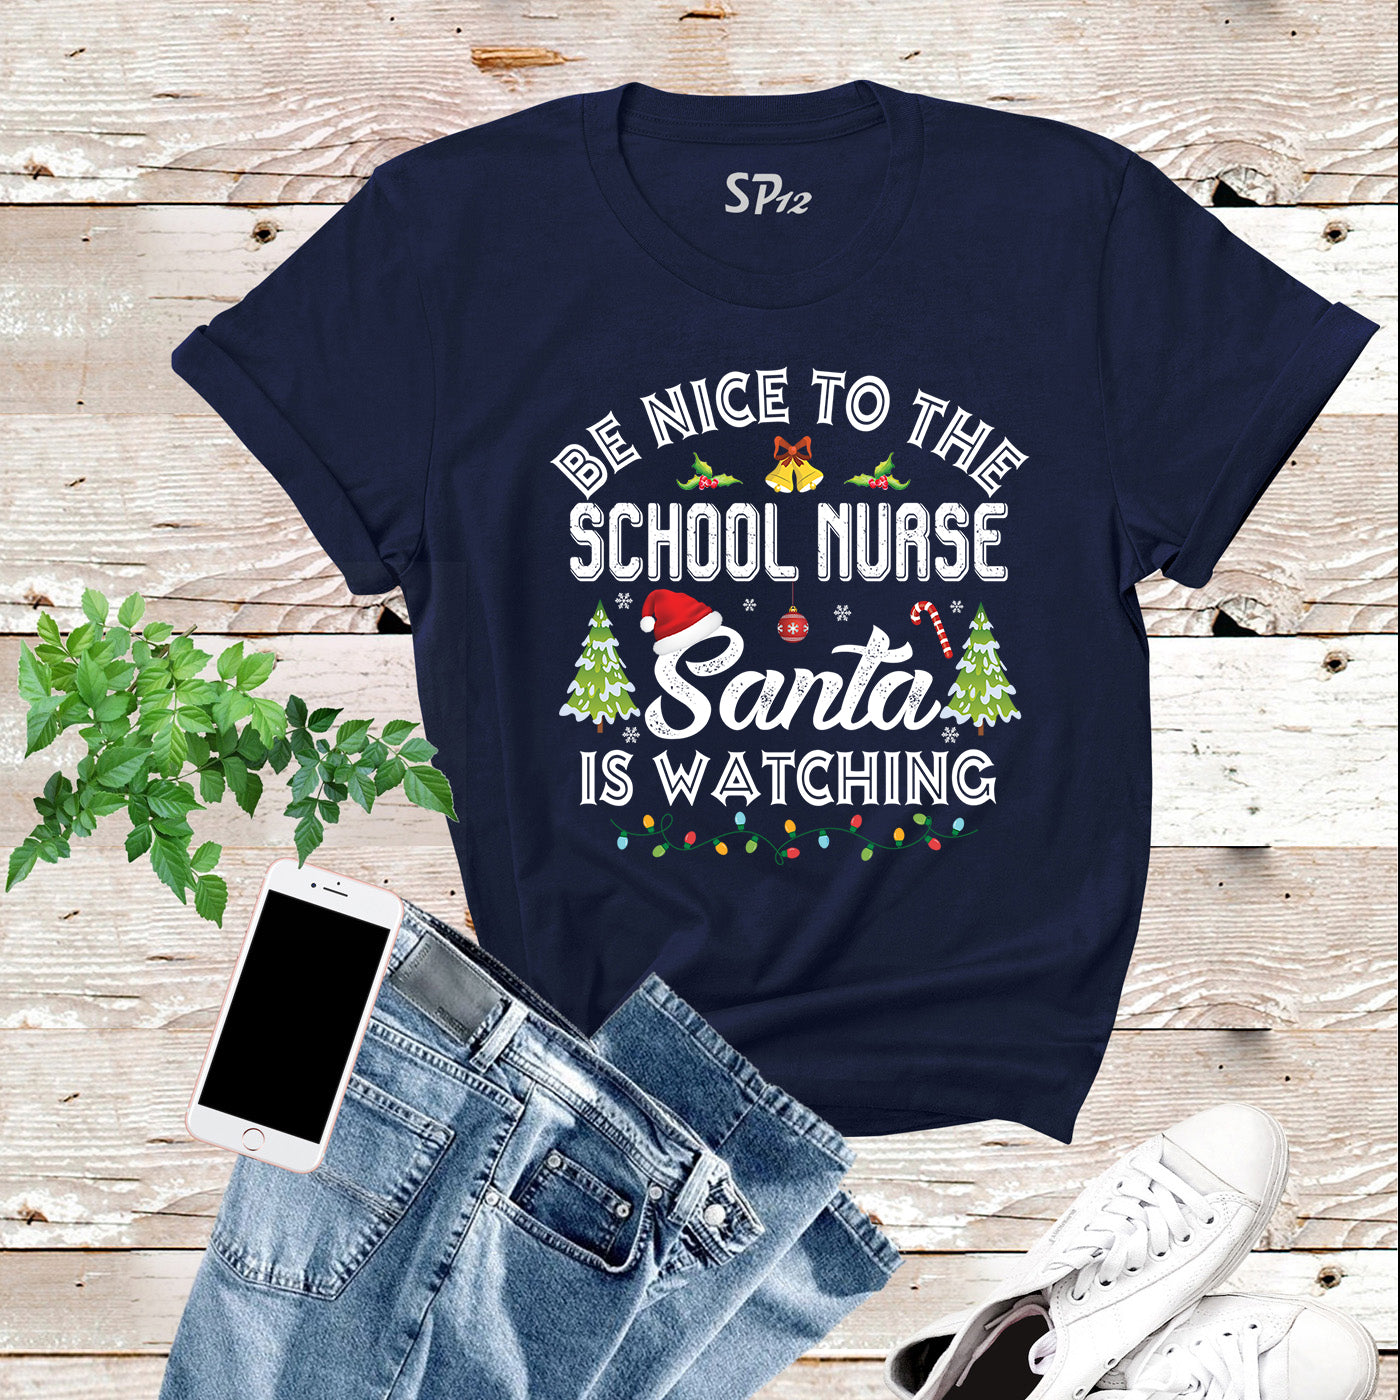 Be Nice to The School Nurse Sanata is Watching T Shirt